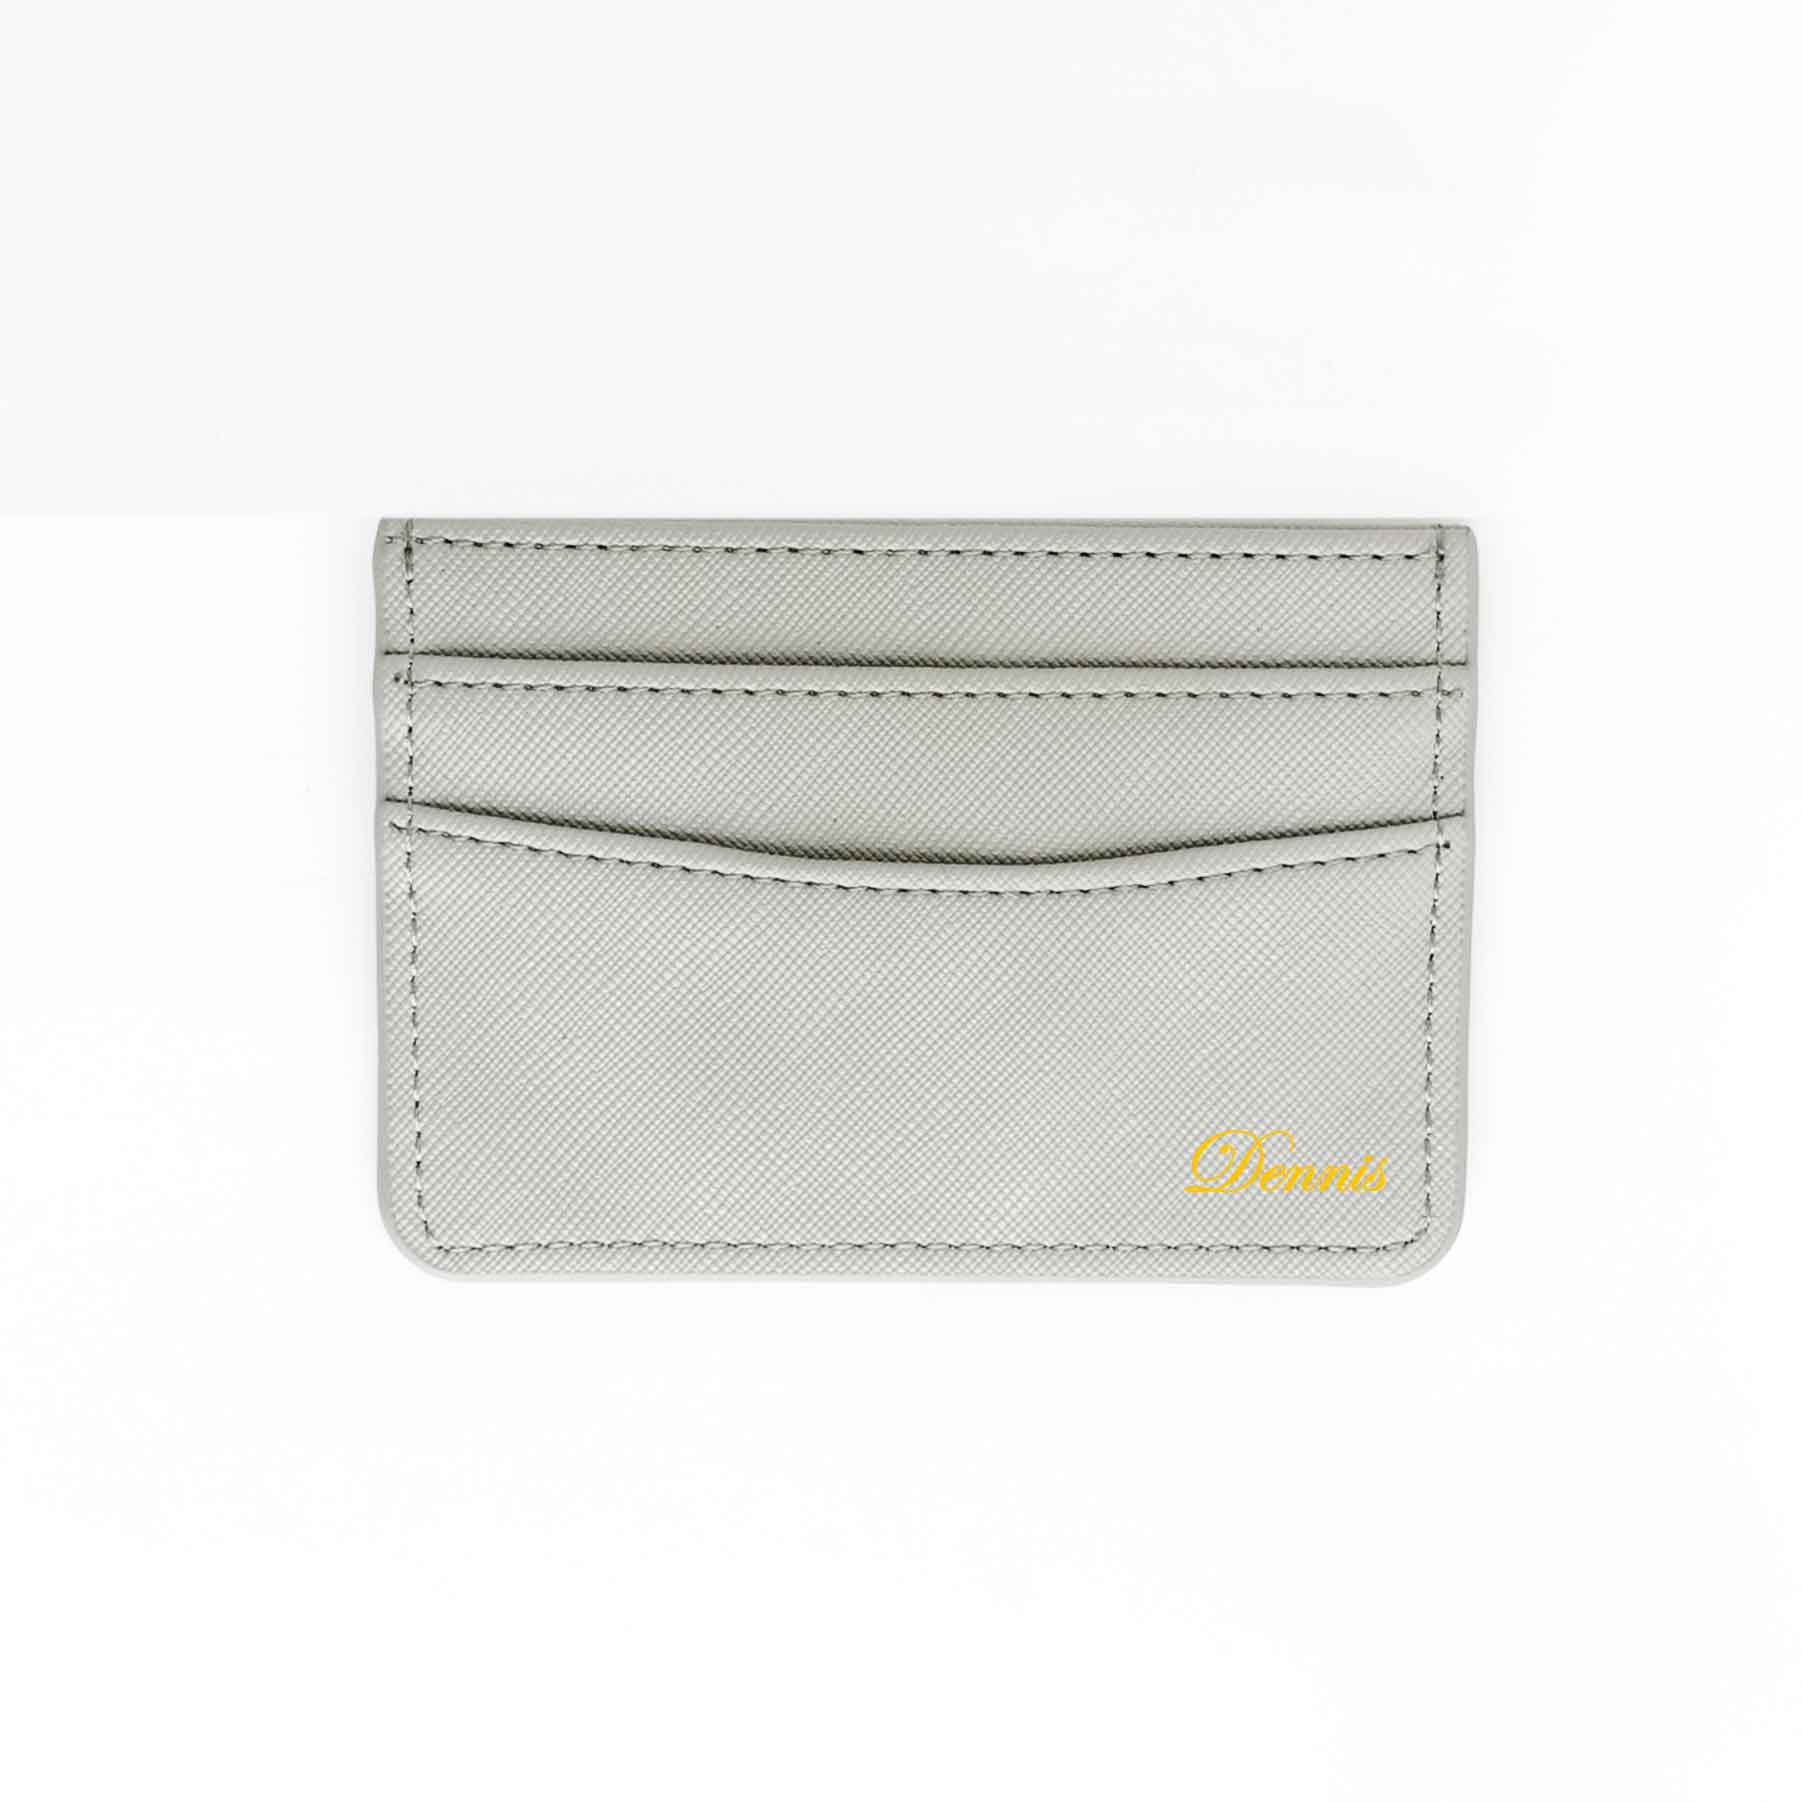 Custom Name Saffiano Leather Cardholder - Grey